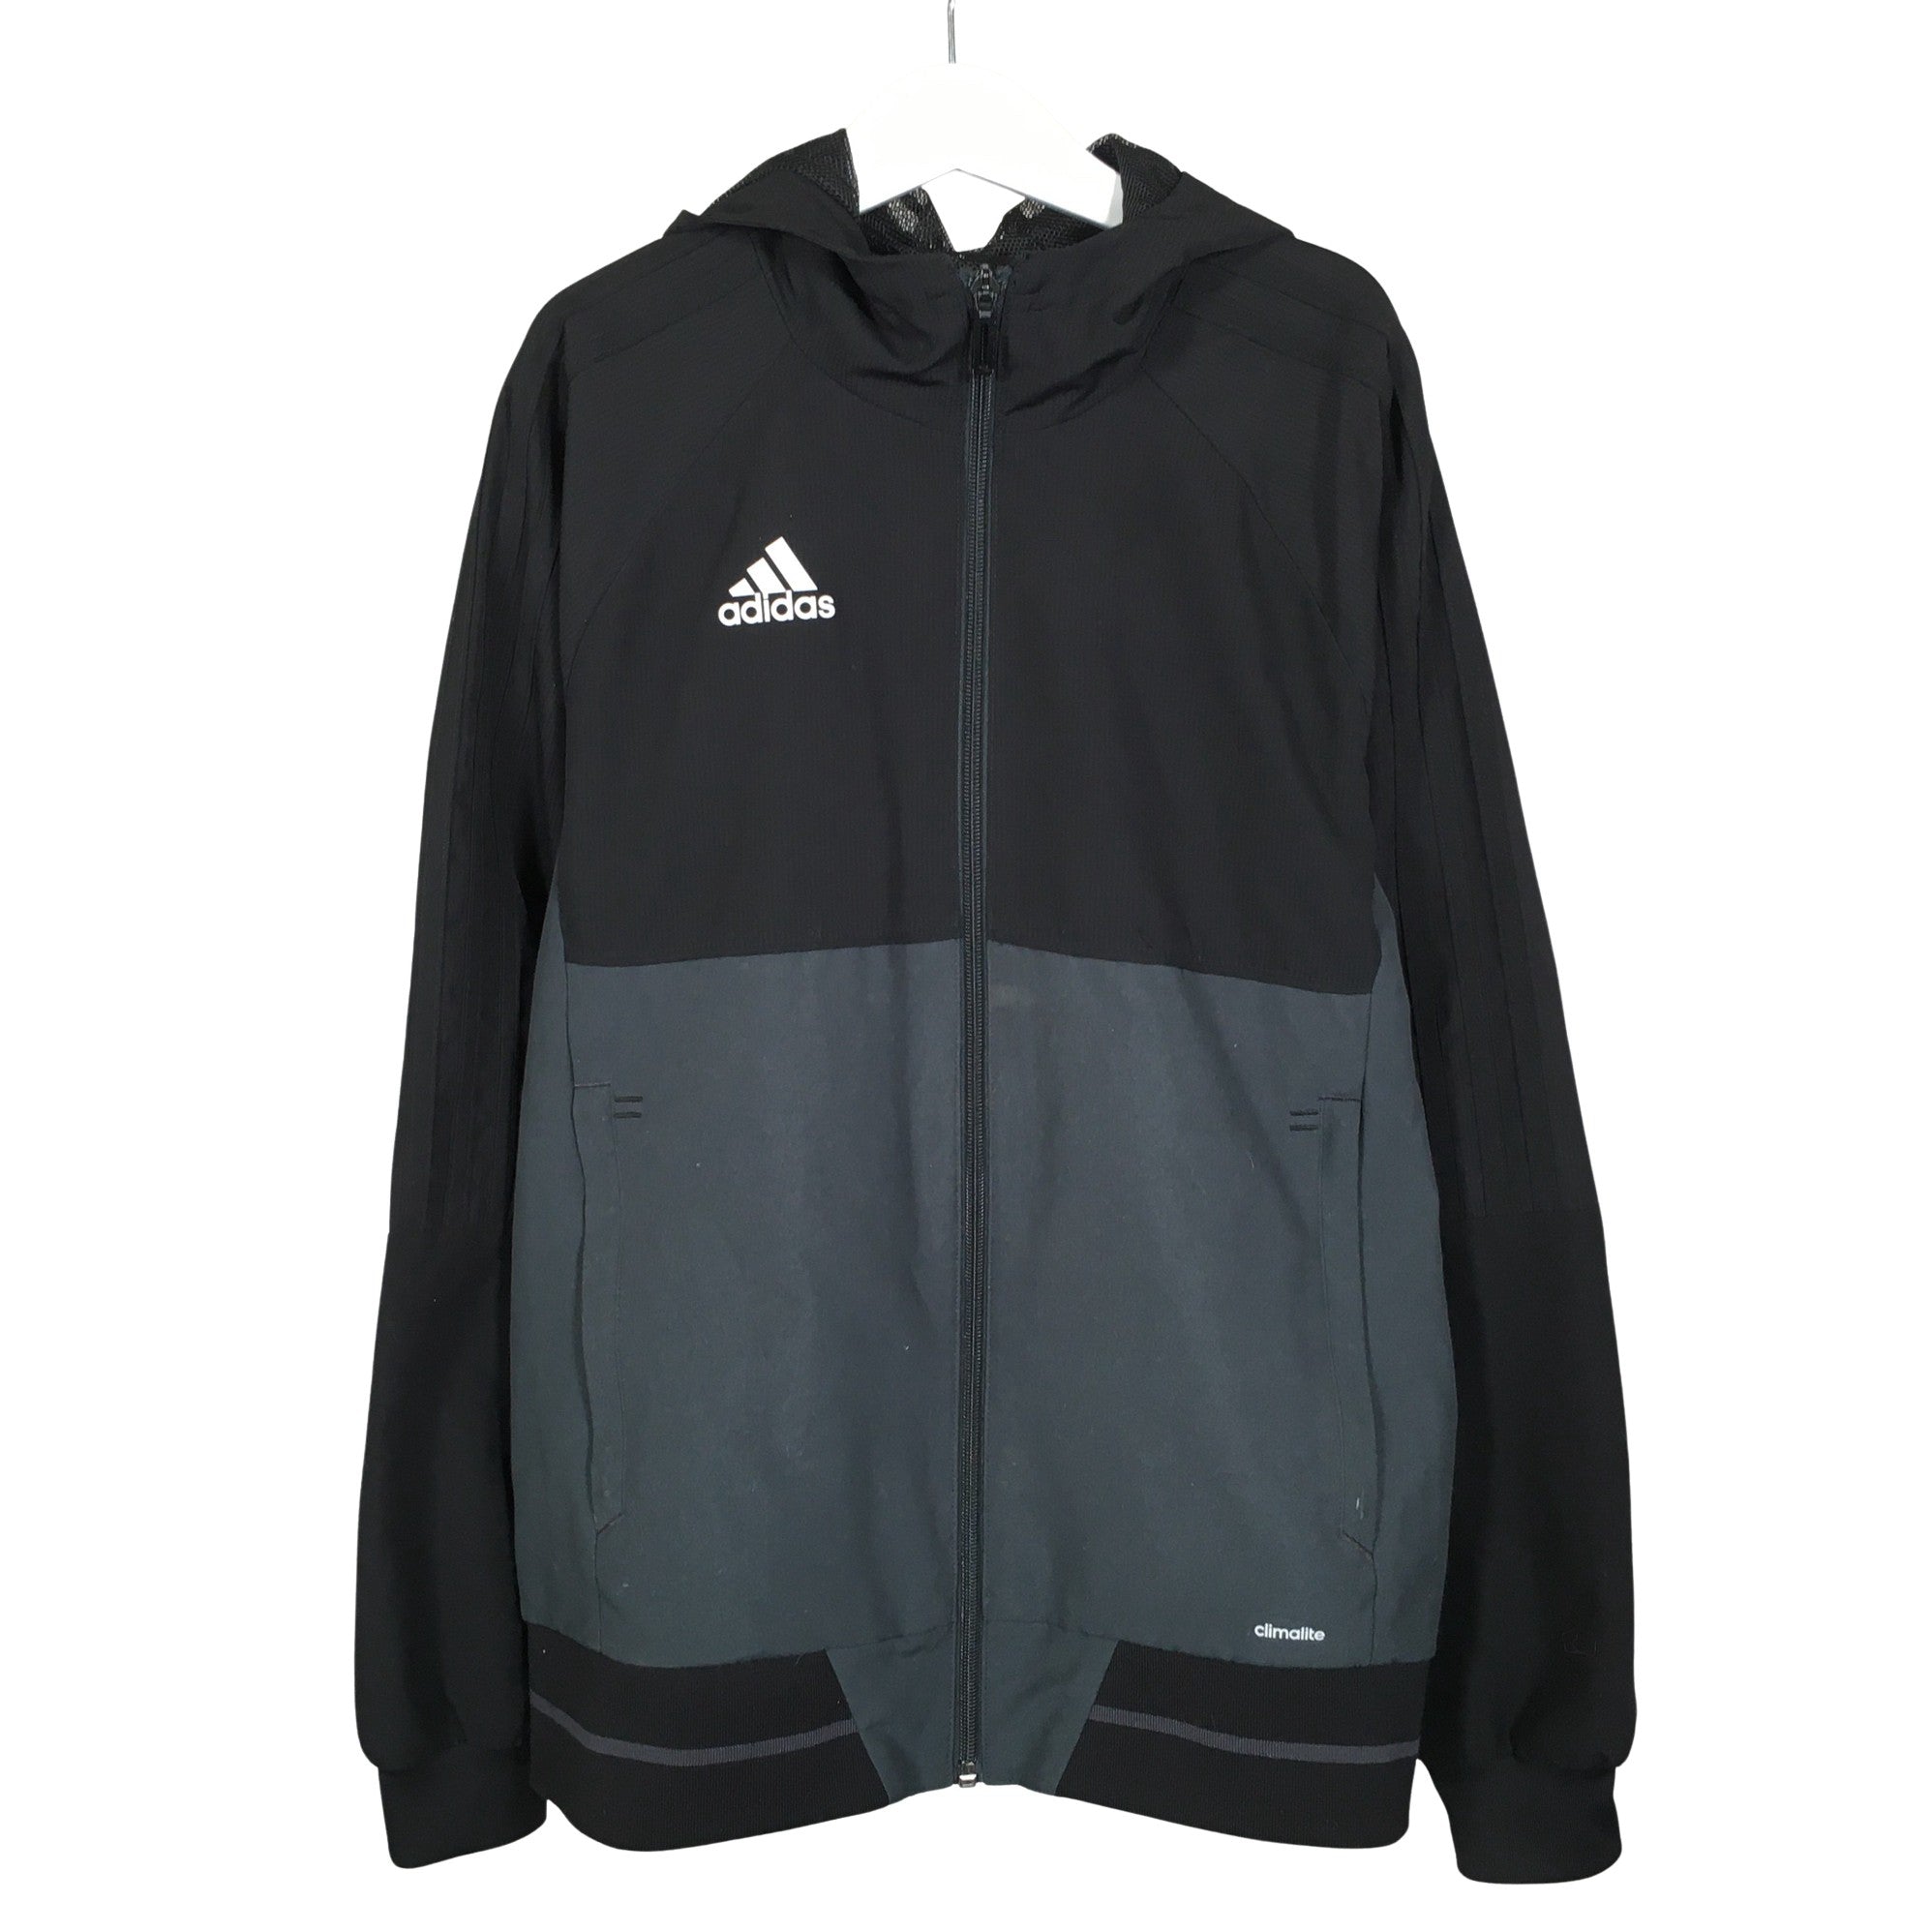 Adidas Spring/Fall jacket, size 146 - 152 | Emmy